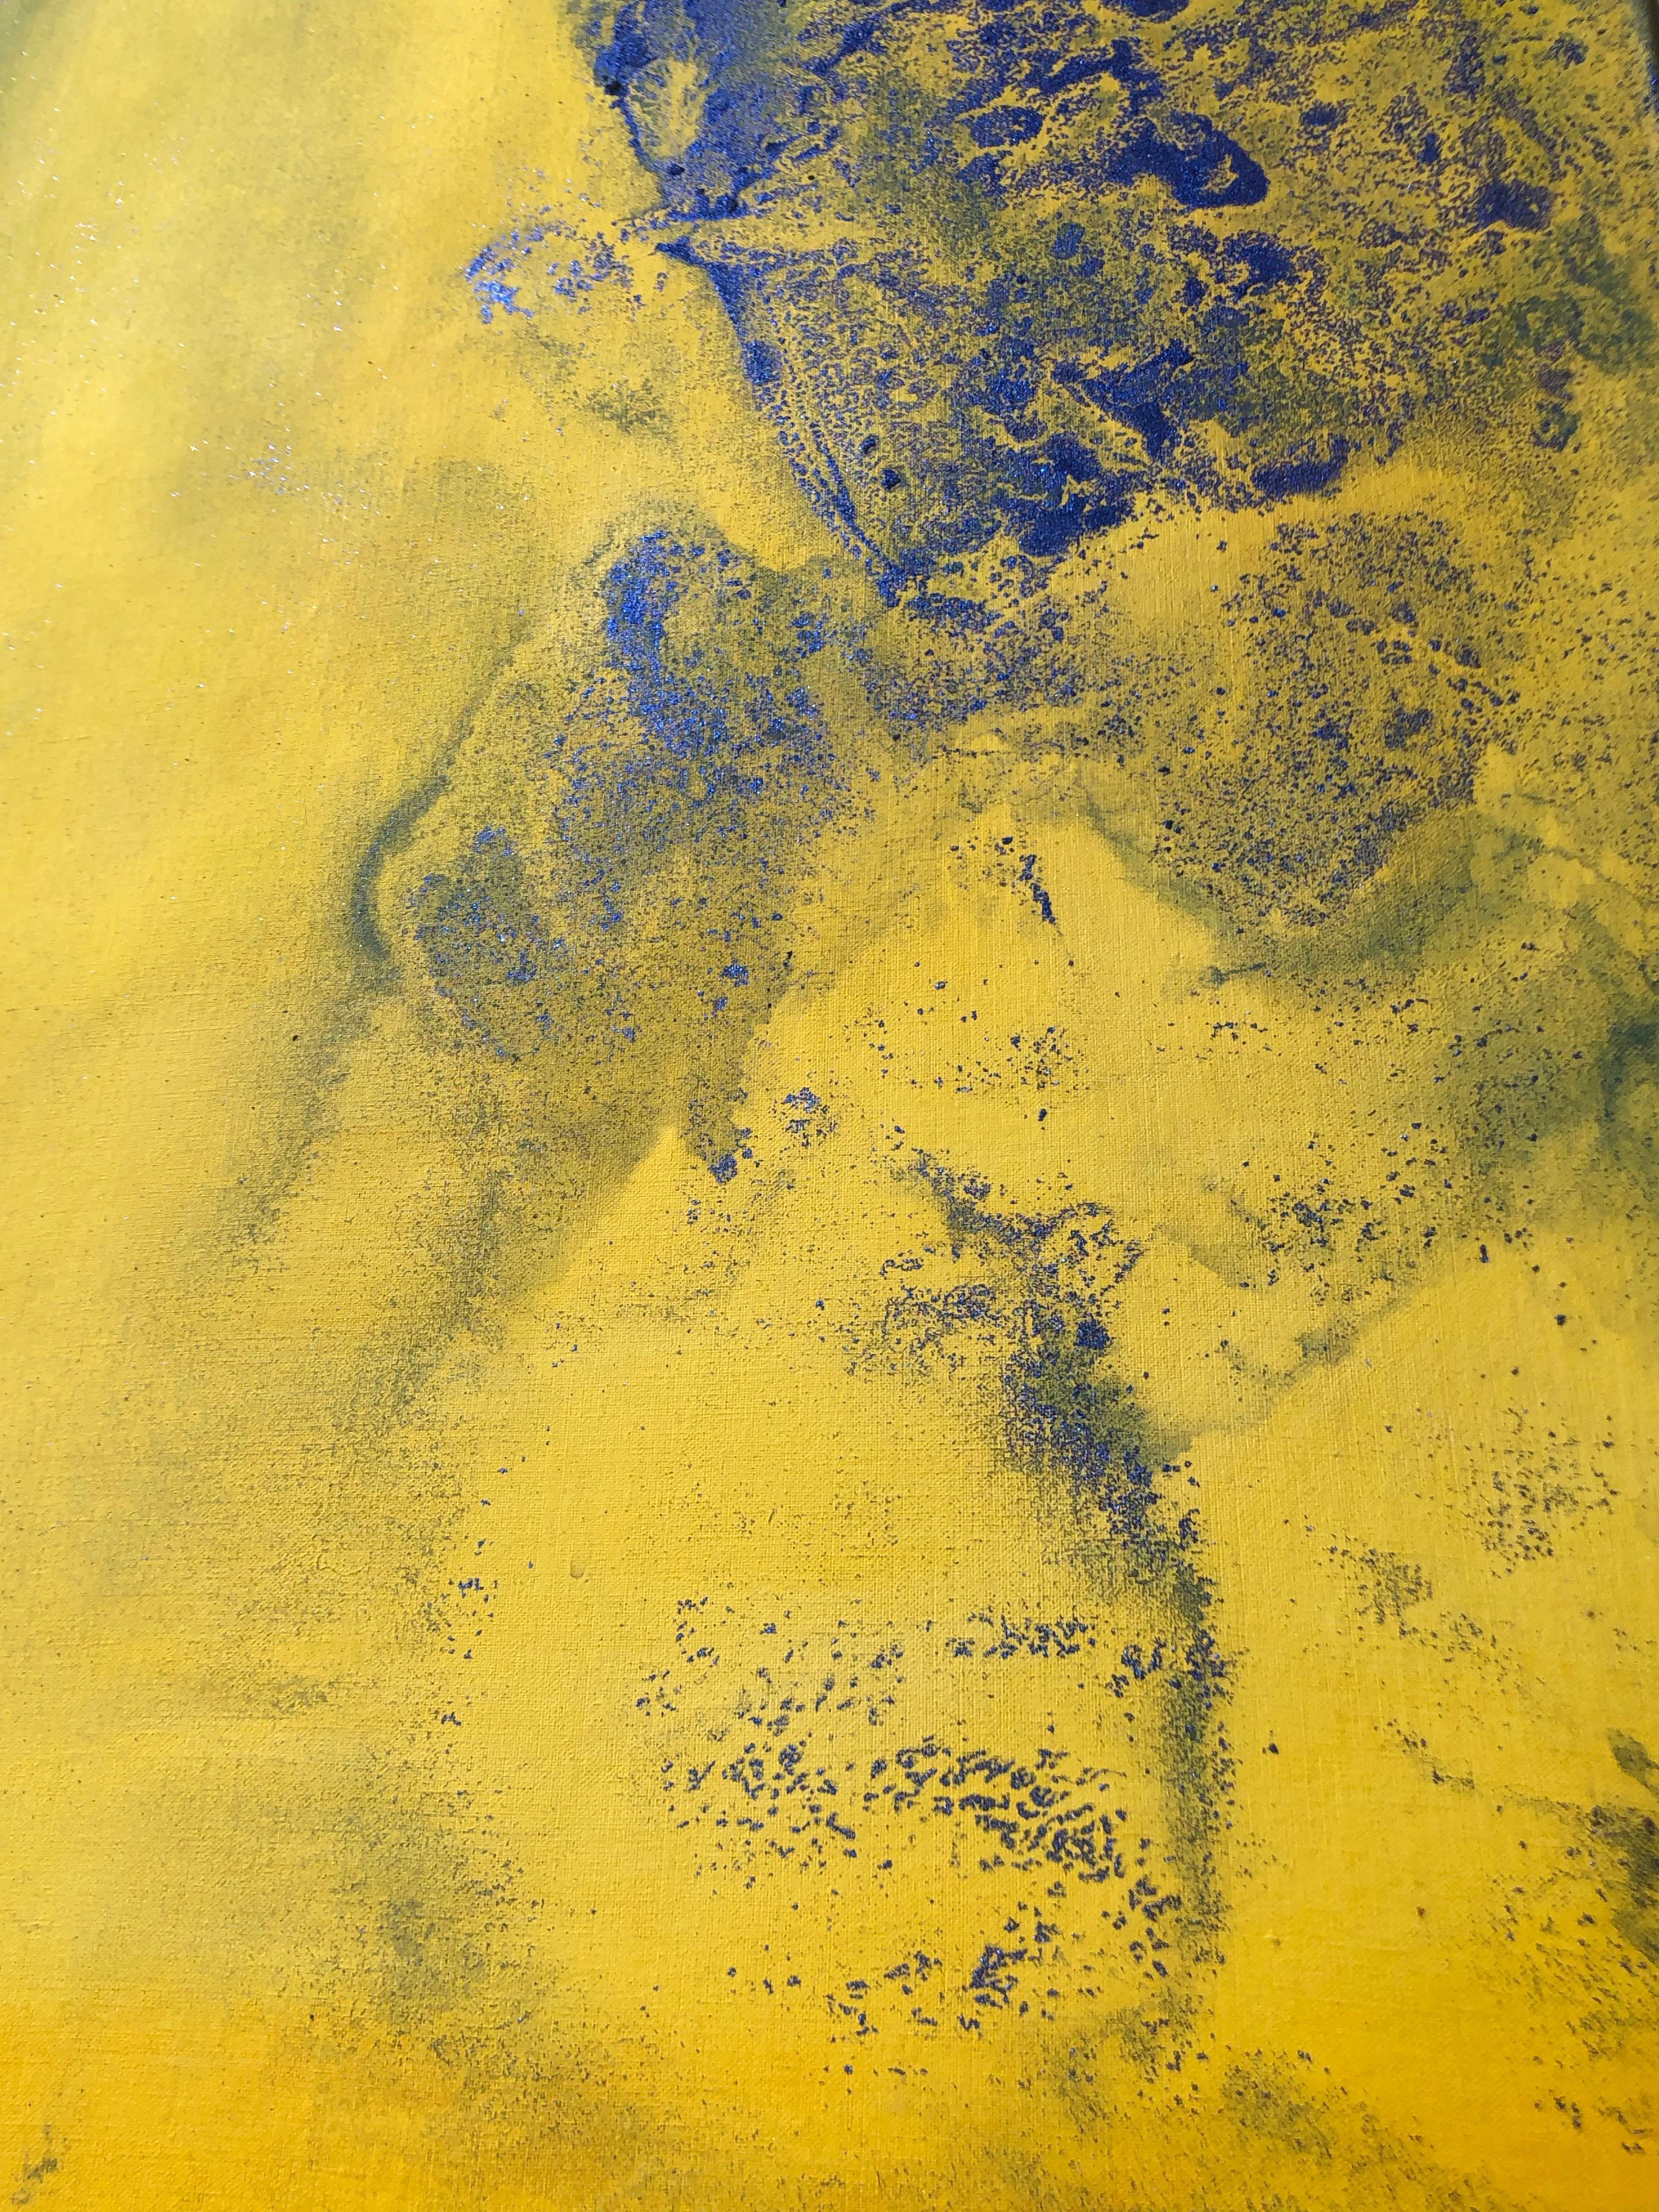 Contemporary art - 21st century painting on linen canvas - Blue, yellow, waves (Violett), Abstract Painting, von Volodymyr Zayichenko